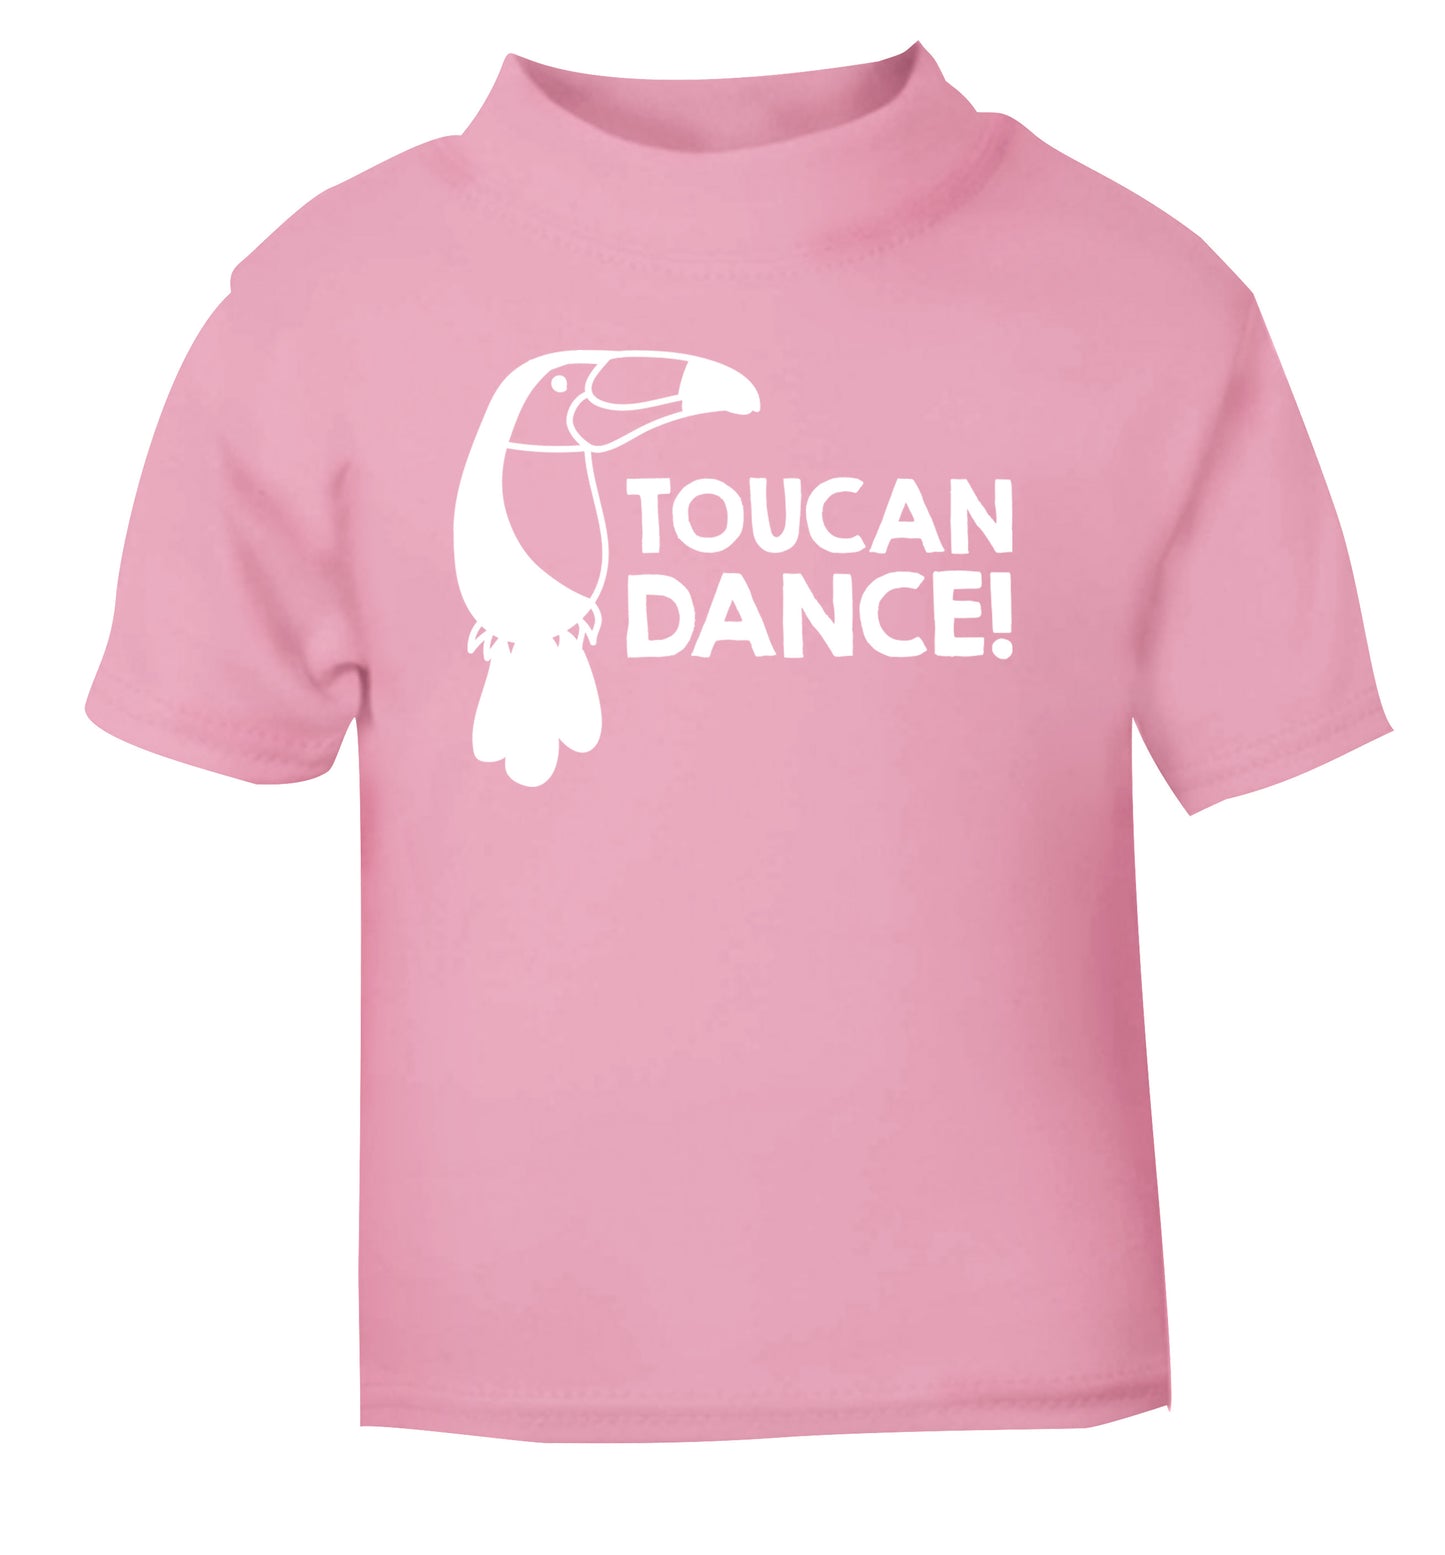 Toucan dance light pink Baby Toddler Tshirt 2 Years